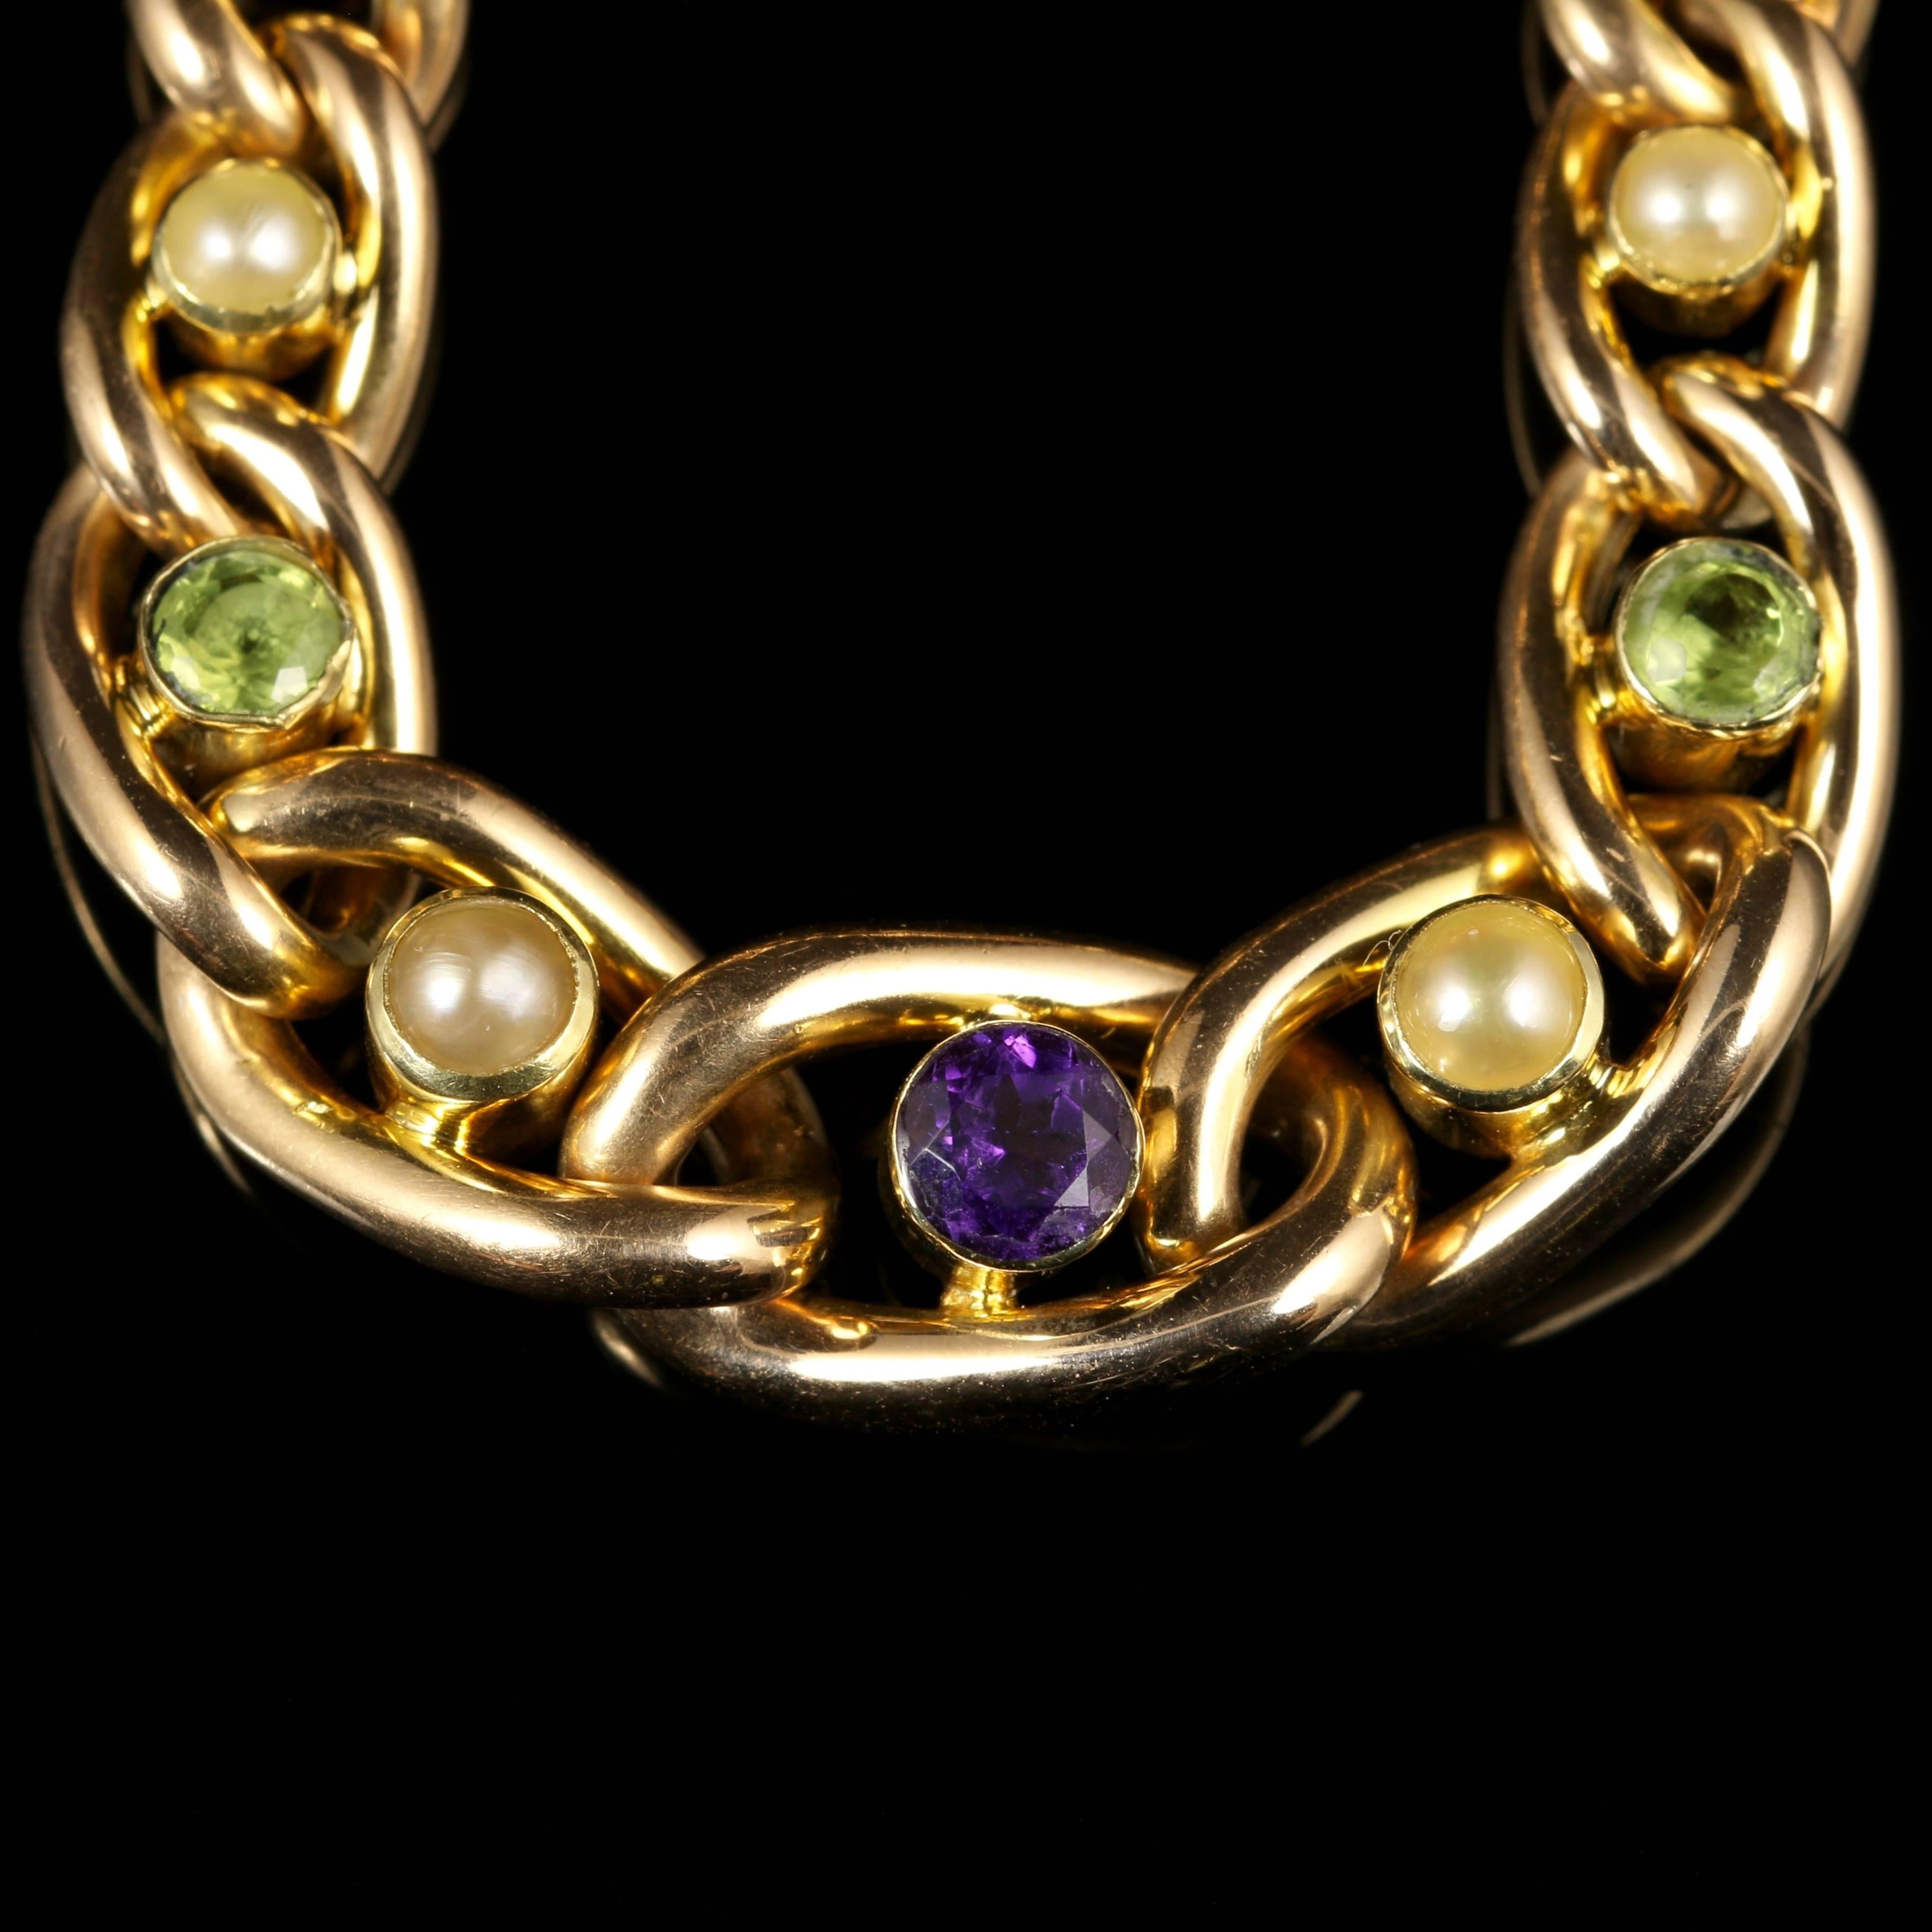 Antique Suffragette Gold Bracelet 15 Carat Gold, circa 1900 2